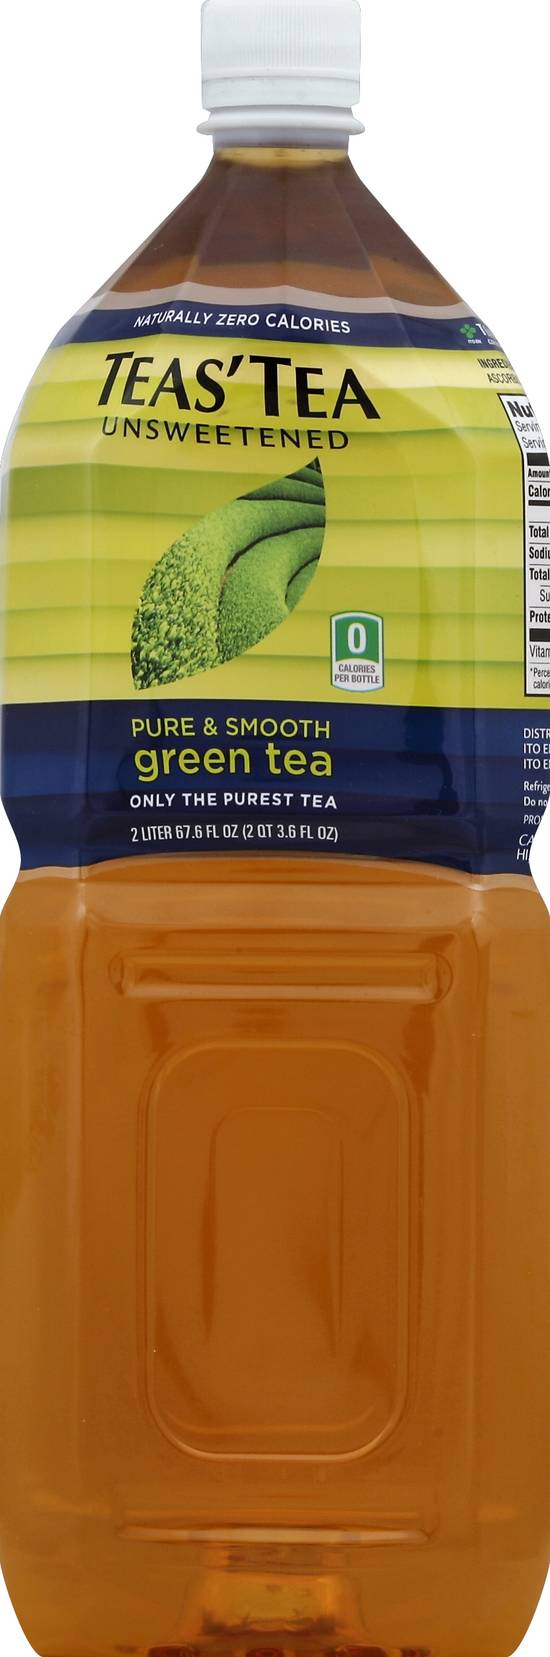 Teas' Tea Unsweetened Pure & Smooth Green Tea (67.6 fl oz)